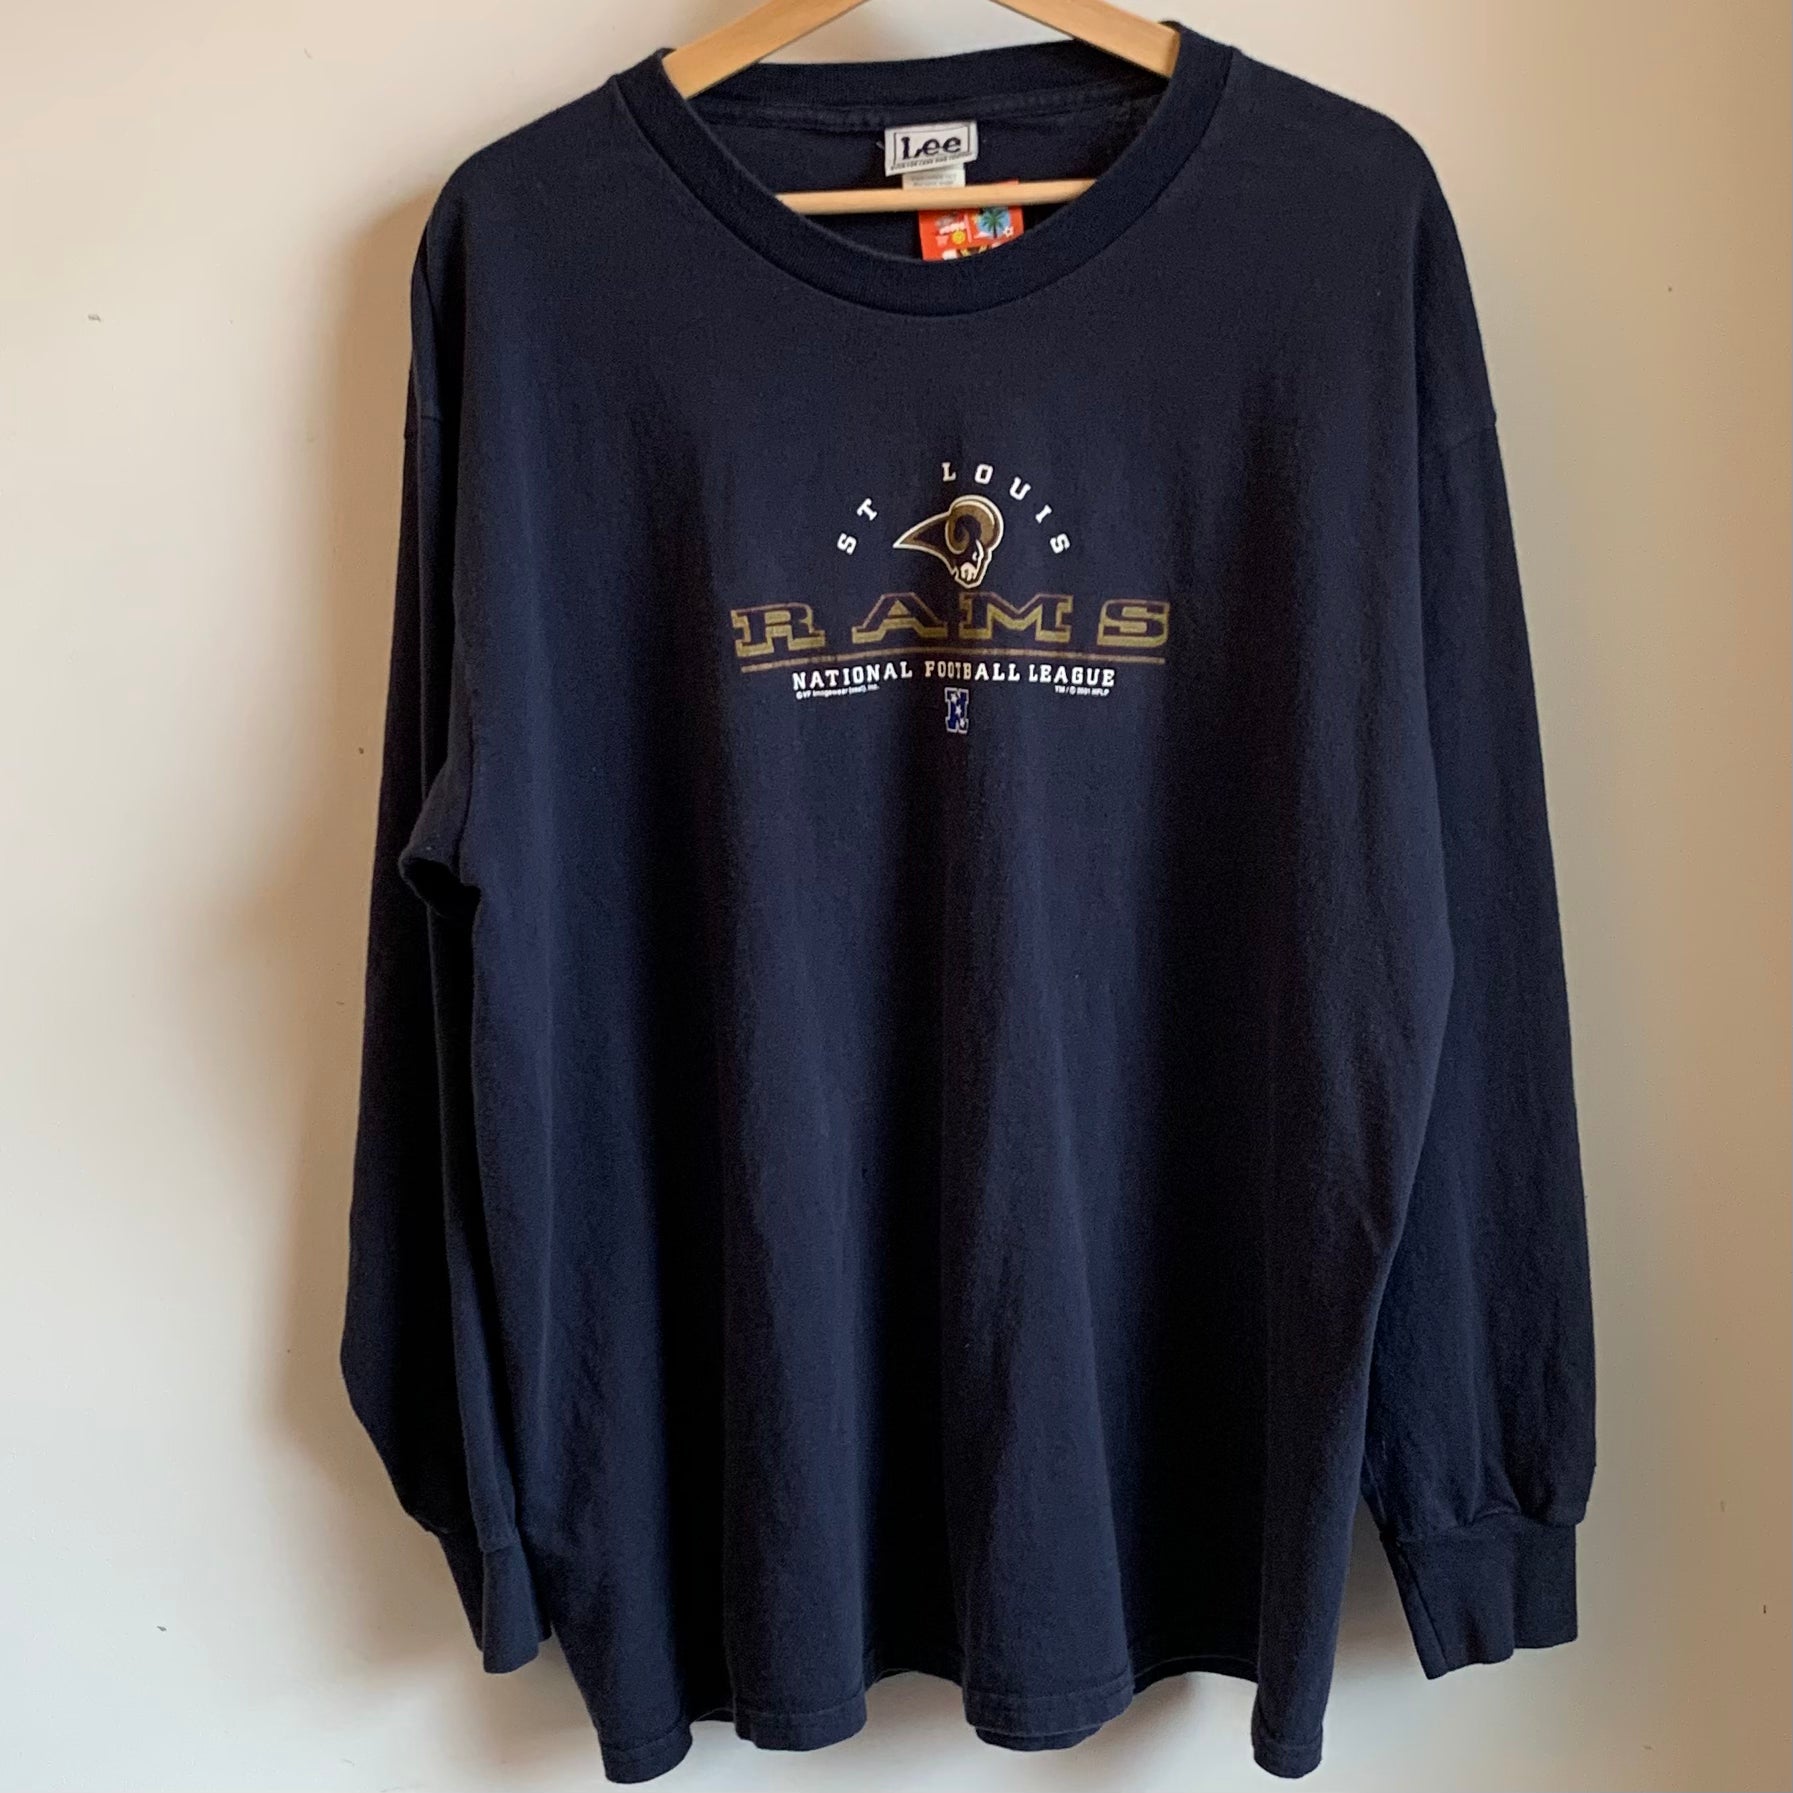 Retro St. Louis Arch Unisex Short Sleeve T-Shirt - Light Blue – Series Six